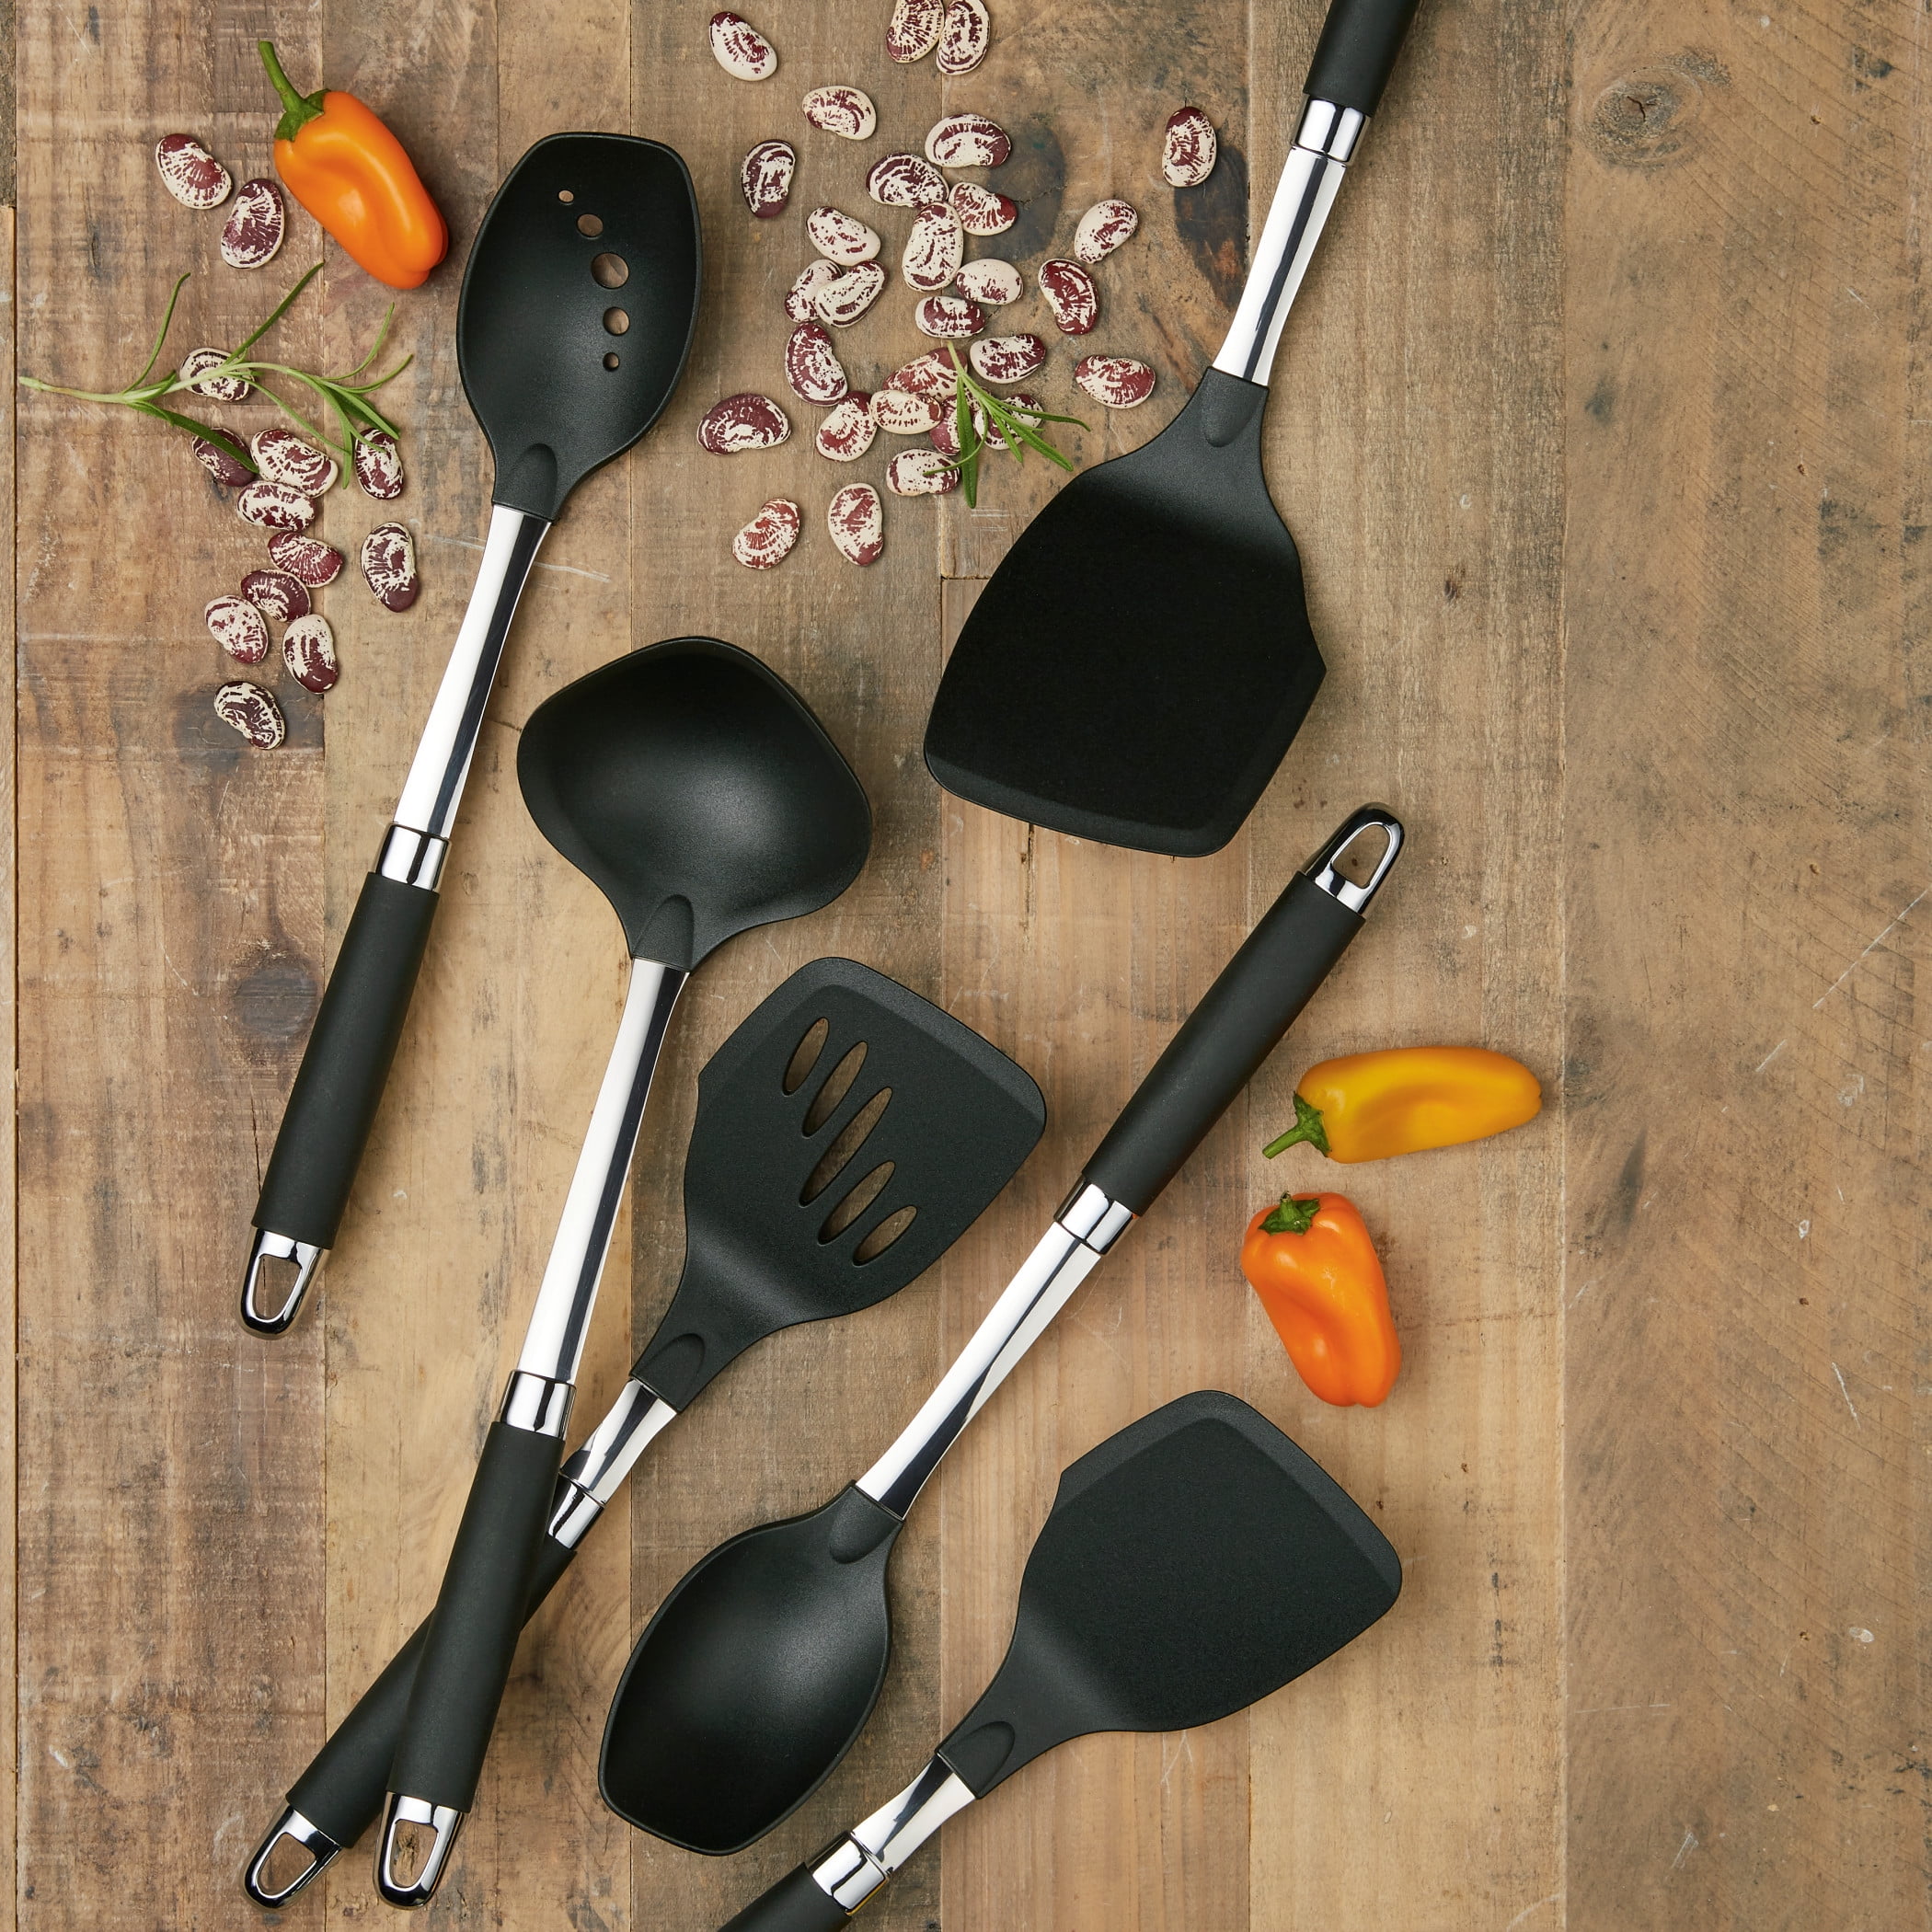 Anolon Suregrip Gadgets Nonstick Utensil Kitchen Cooking Tools Set, 5 Piece, Graphite